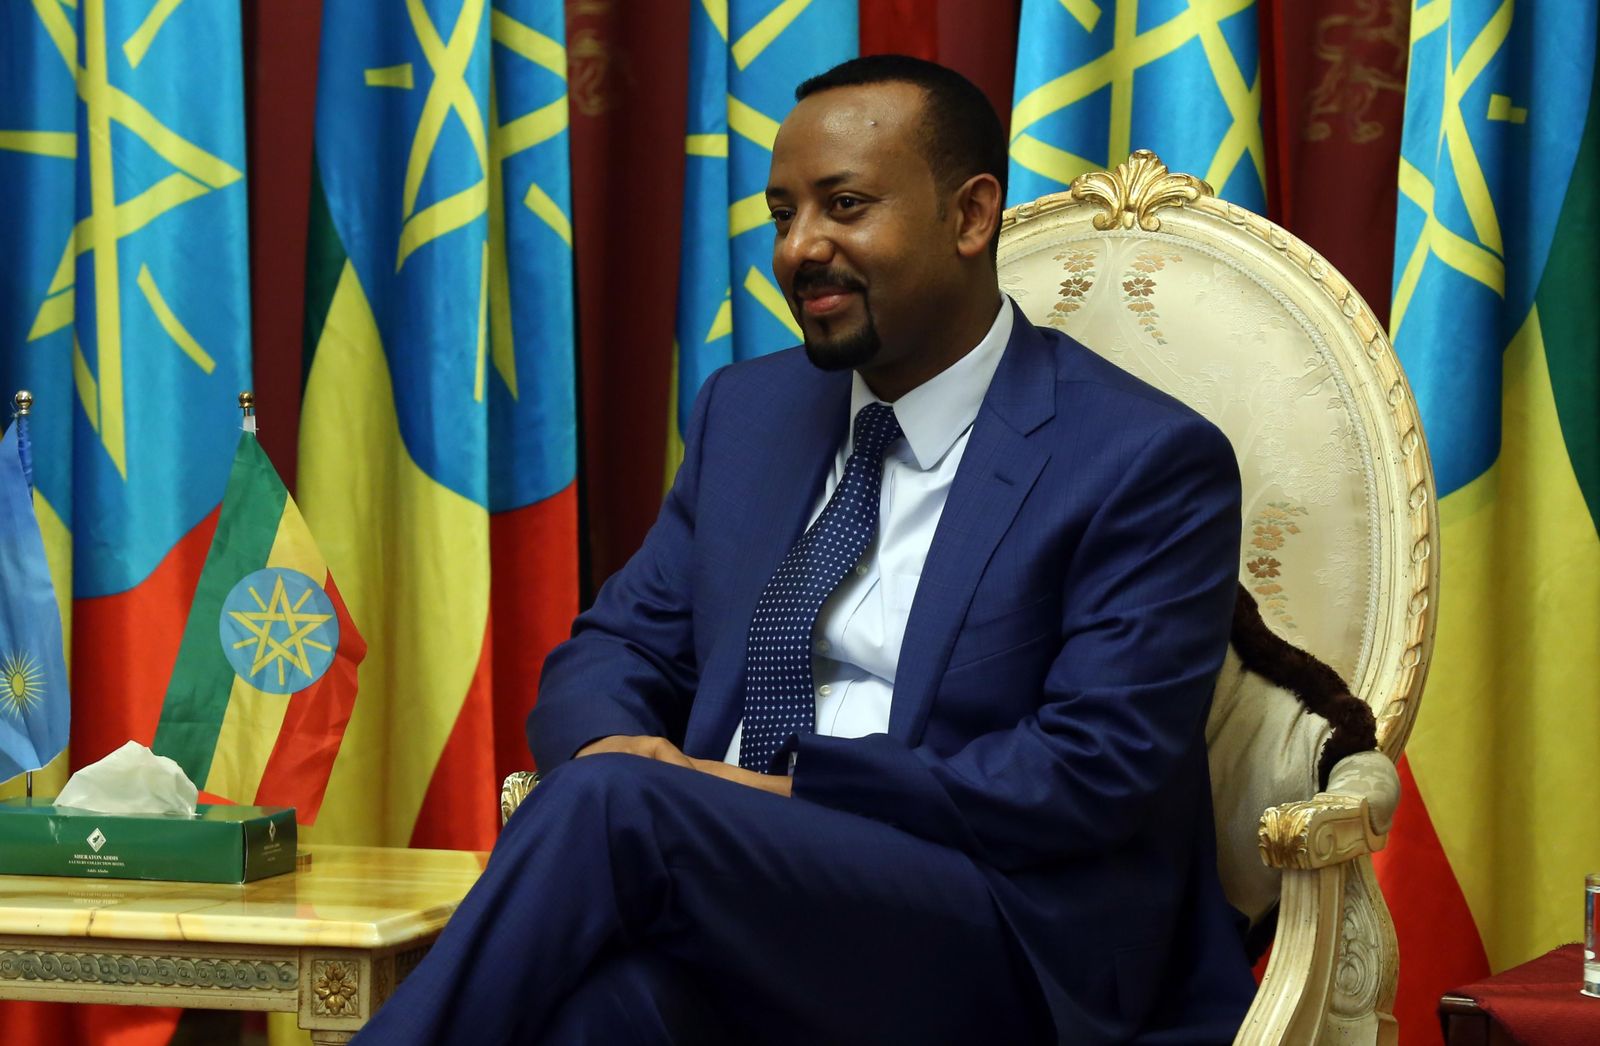 Ethiopian Prime Minister Abiy Ahmed Ali Wins the 2019 Nobel Peace Prize |  Smart News| Smithsonian Magazine